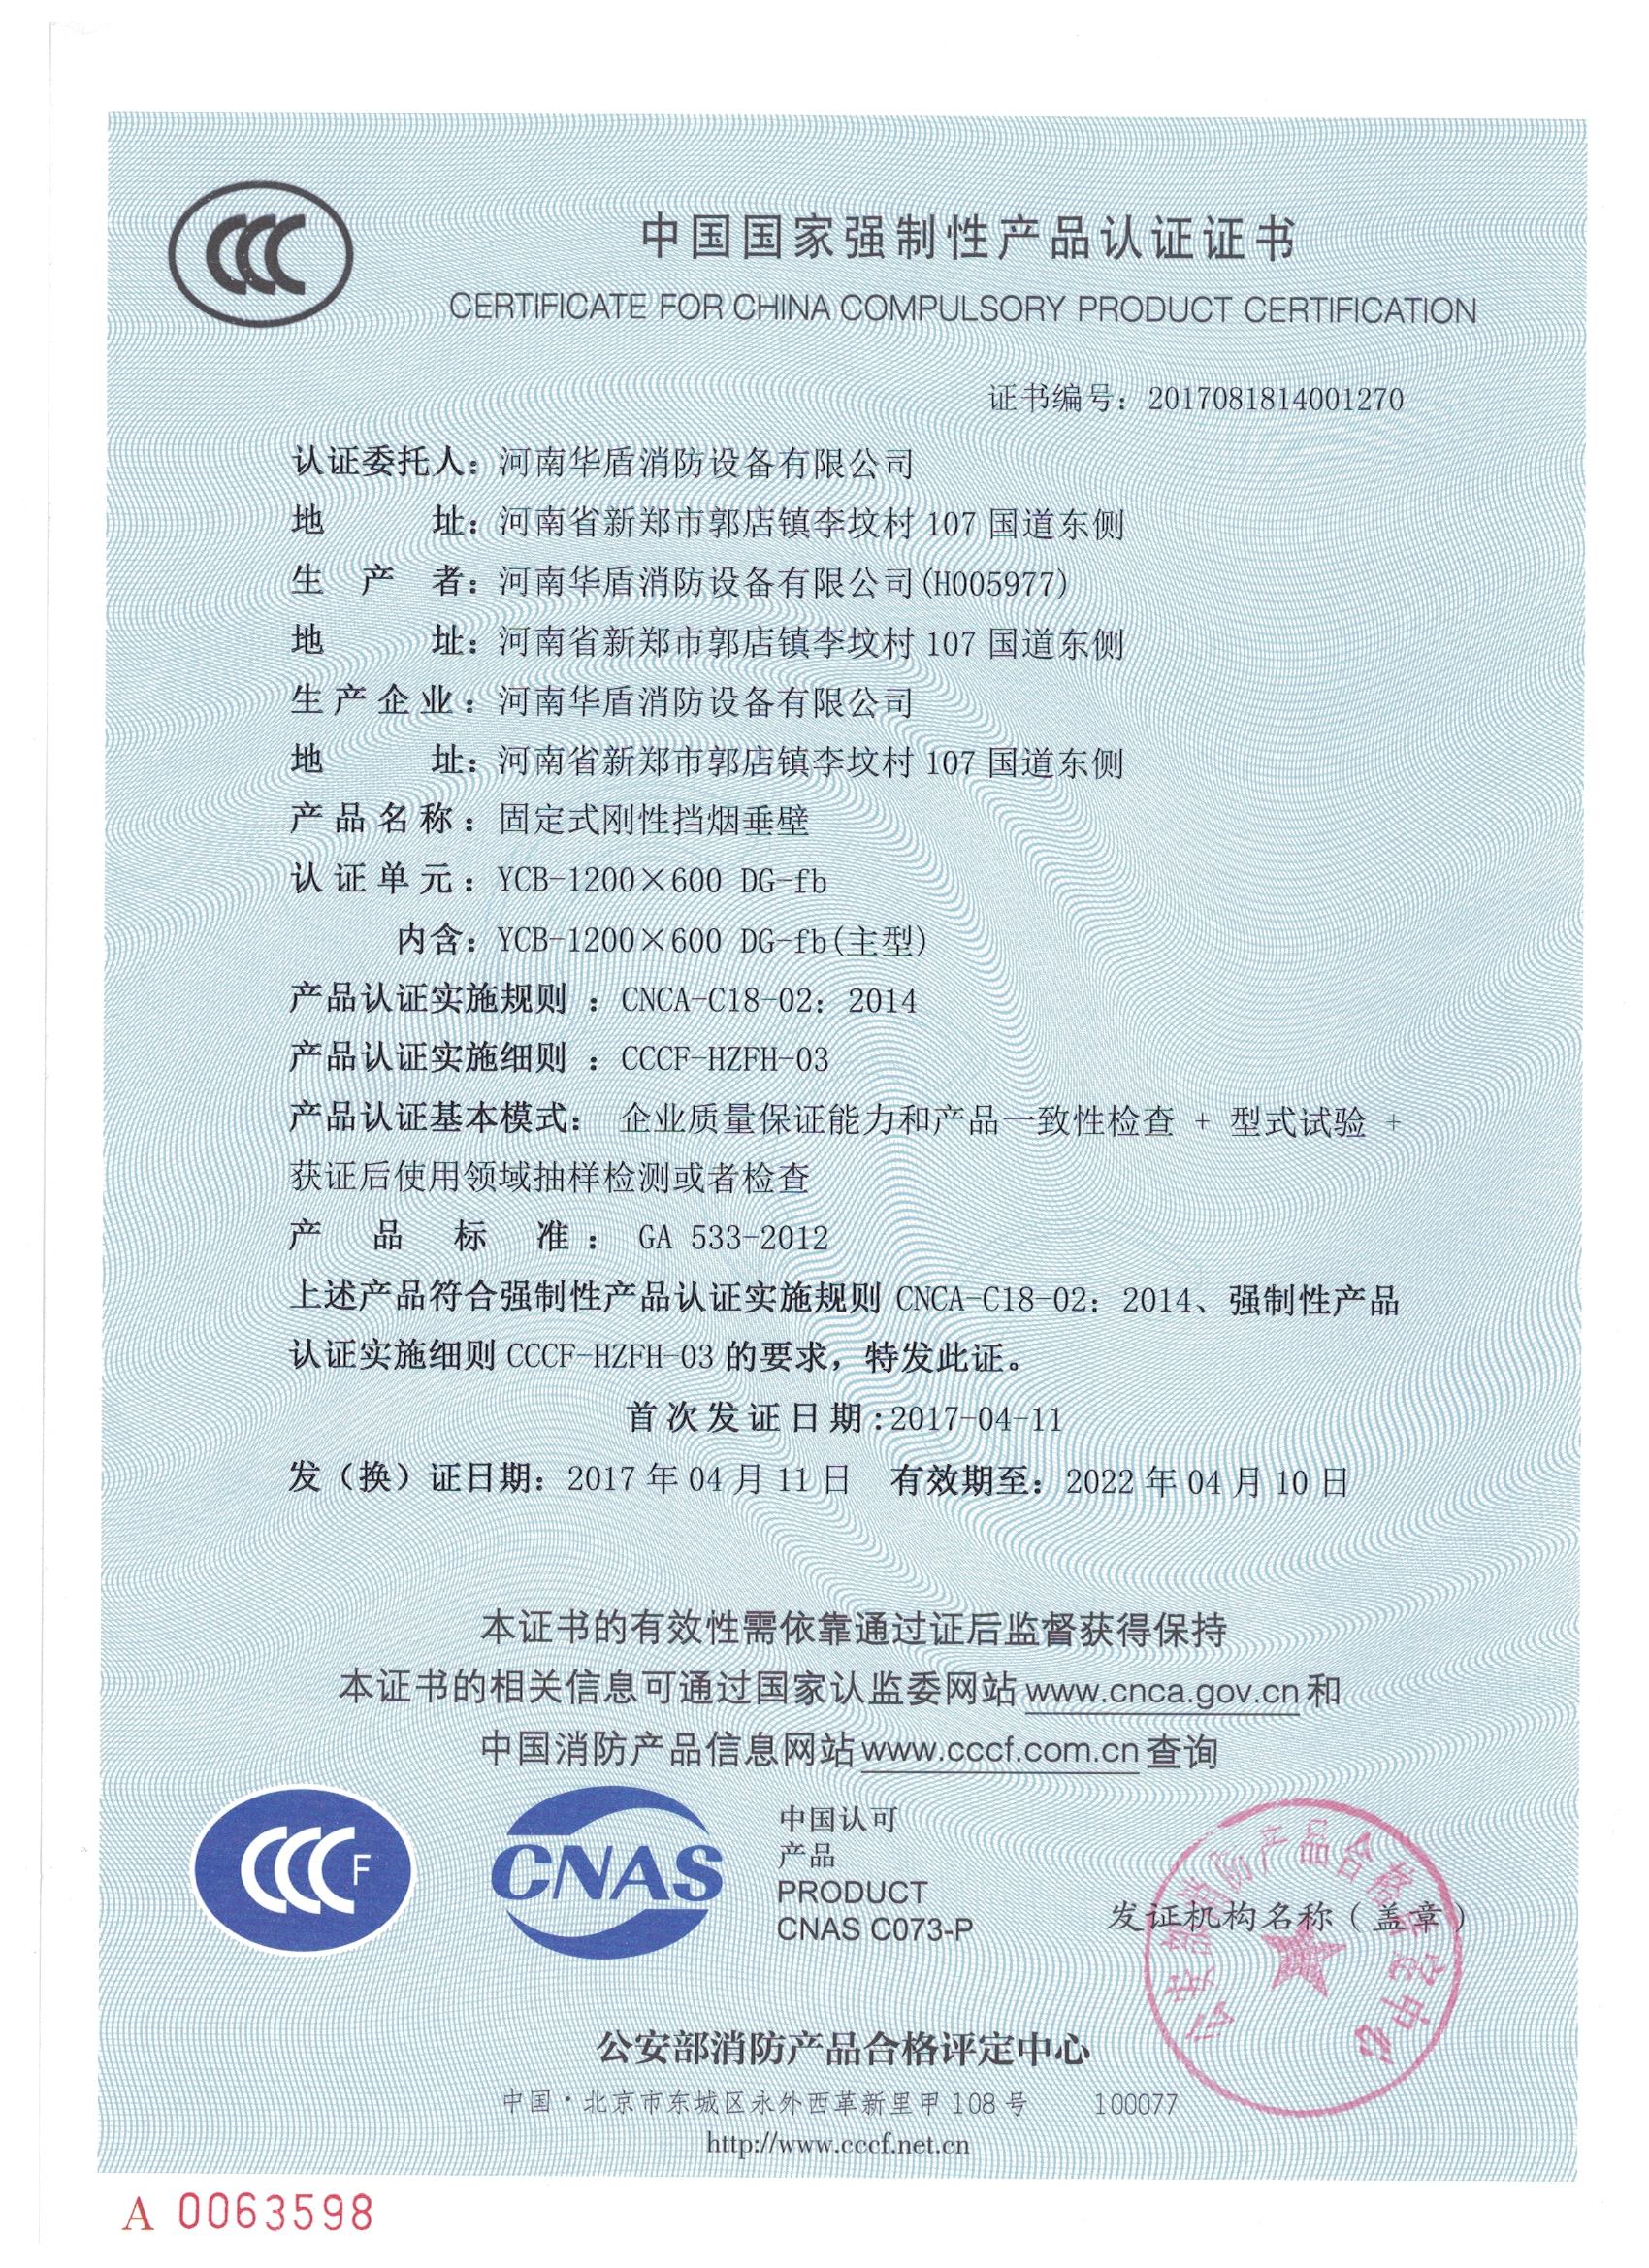 河南YCB-1200X600 DG-fb-3C证书